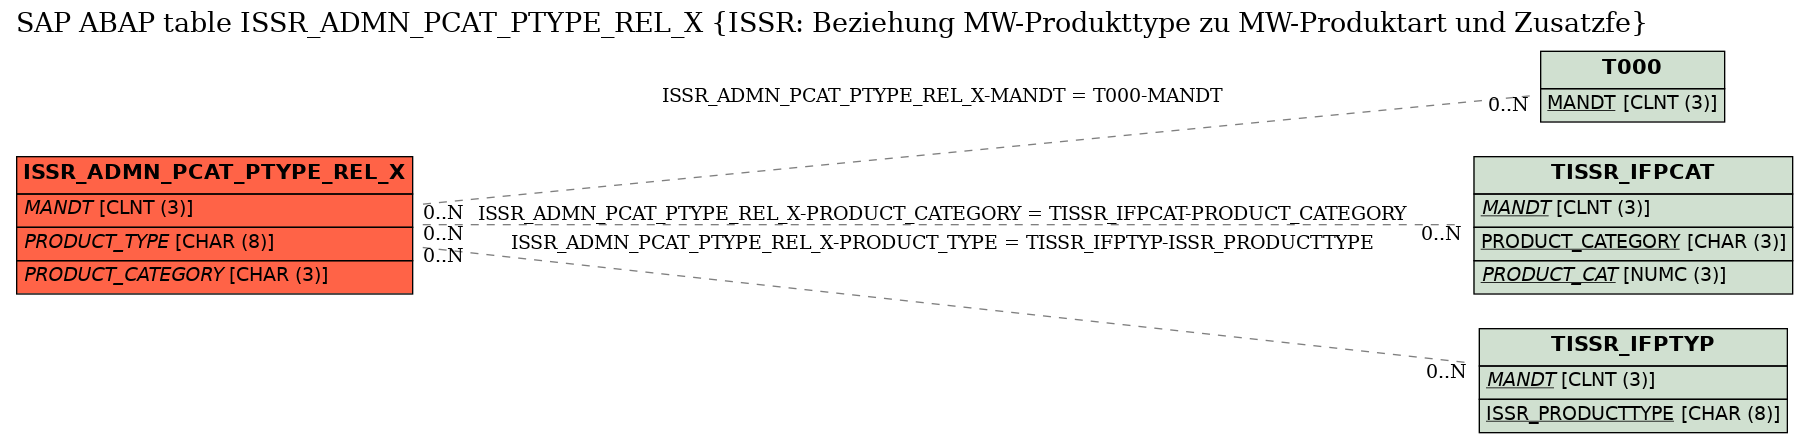 E-R Diagram for table ISSR_ADMN_PCAT_PTYPE_REL_X (ISSR: Beziehung MW-Produkttype zu MW-Produktart und Zusatzfe)